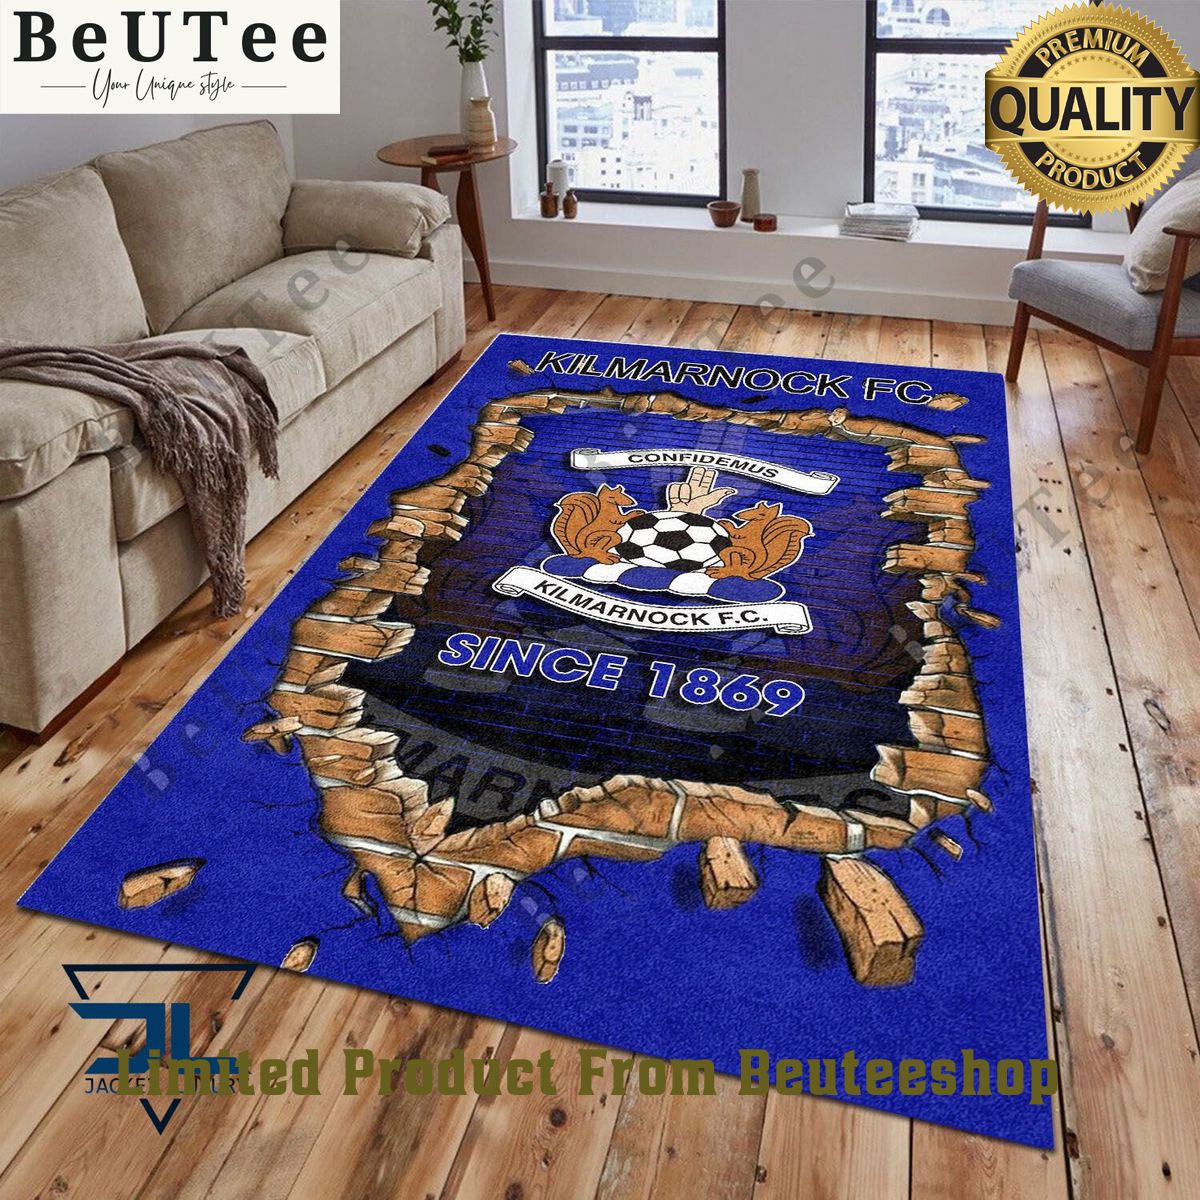 kilmarnock f c 1785 scotland football living room carpet 1 226o0.jpg